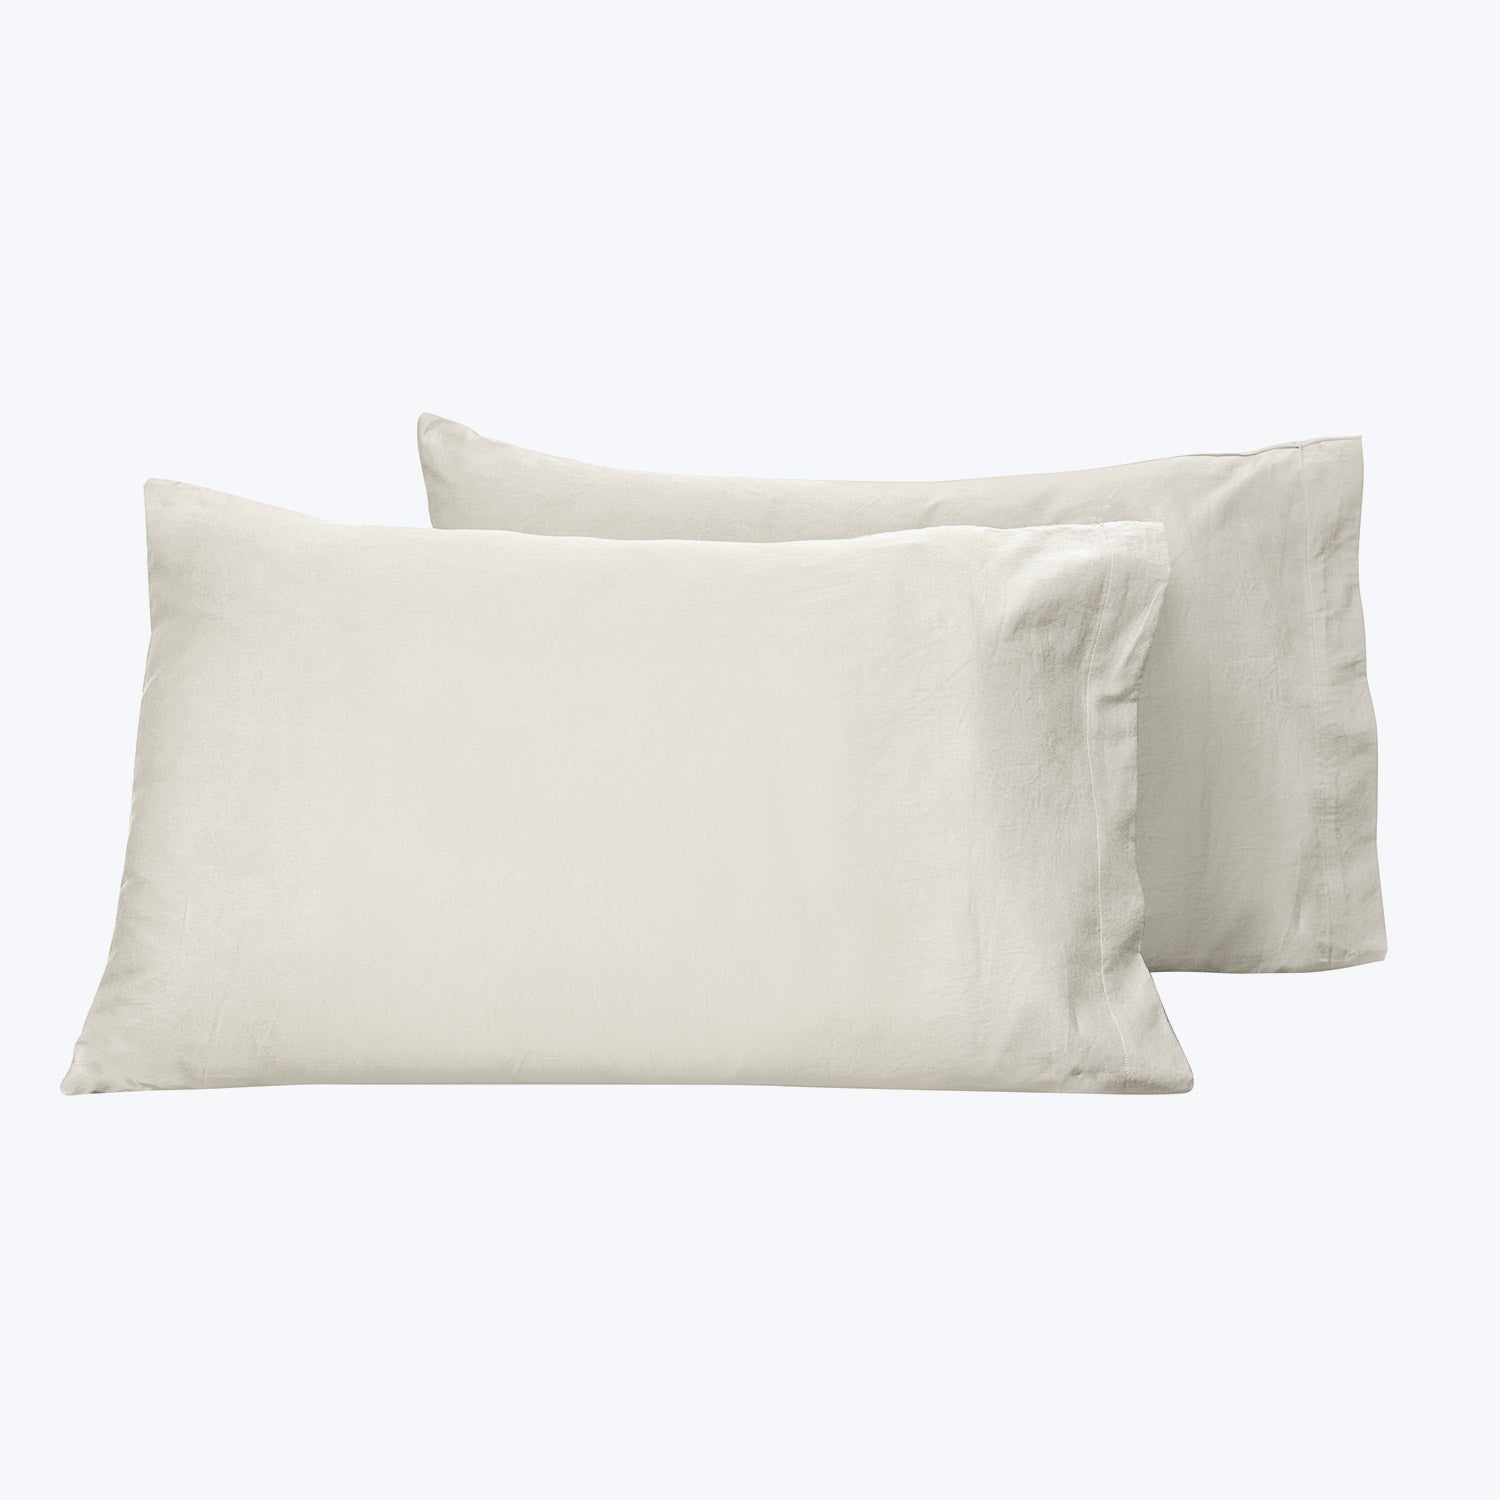 Viola Sheets & Pillowcases Pillowcase Pair / Standard / Ivory